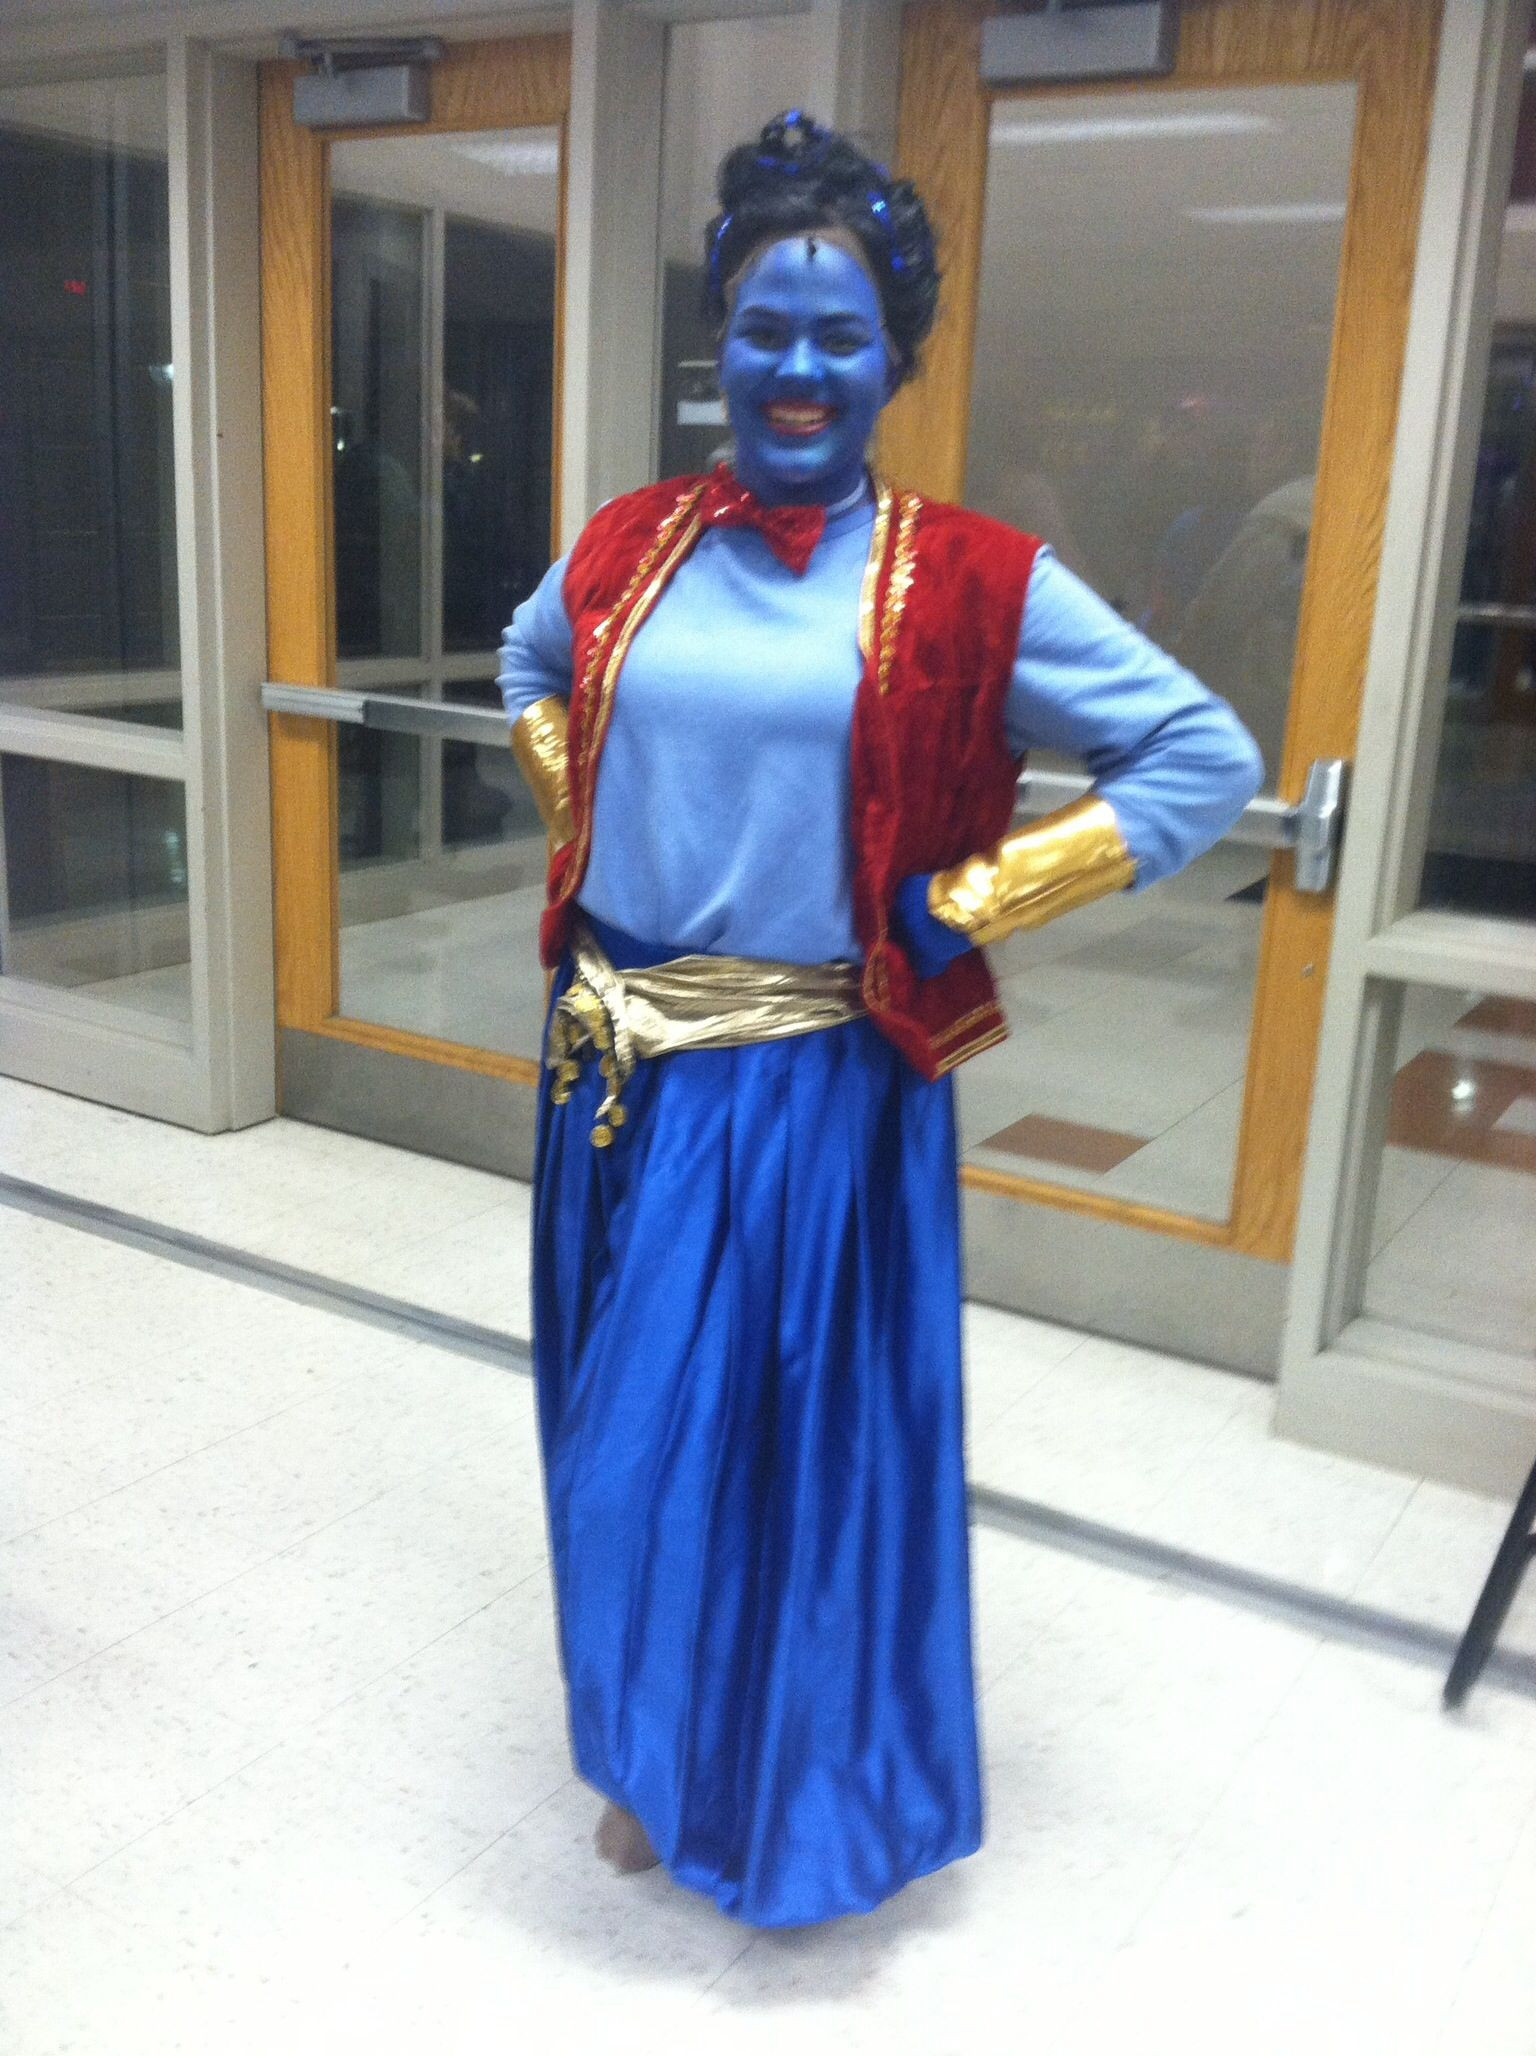 Best ideas about Genie Costumes DIY
. Save or Pin Aladdin Genie costume Elizabeth Mitchell as Genie Now.